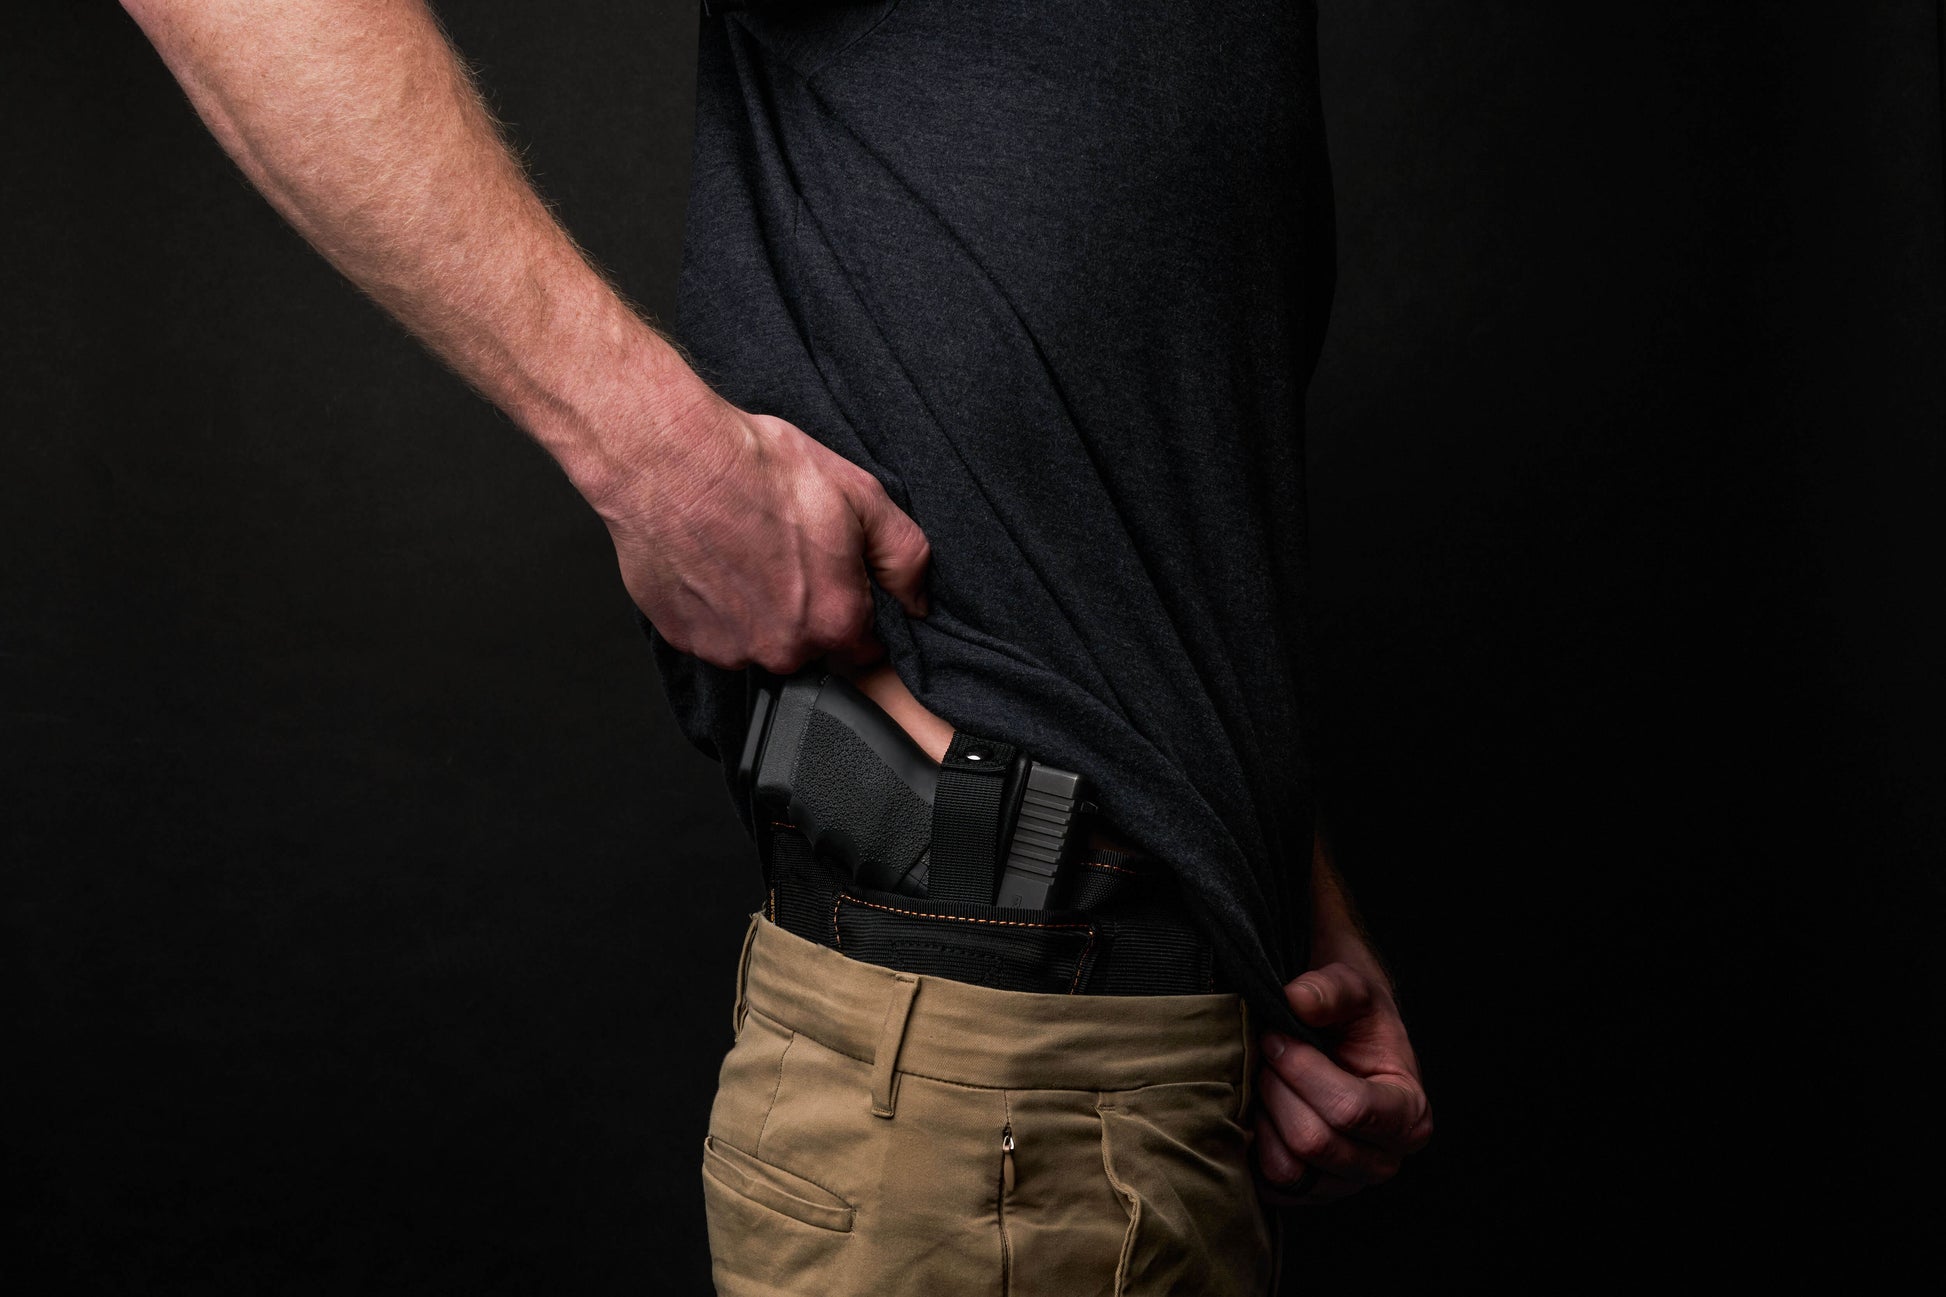 SmartCarry holster: Premium Concealed carry holster / gun holster